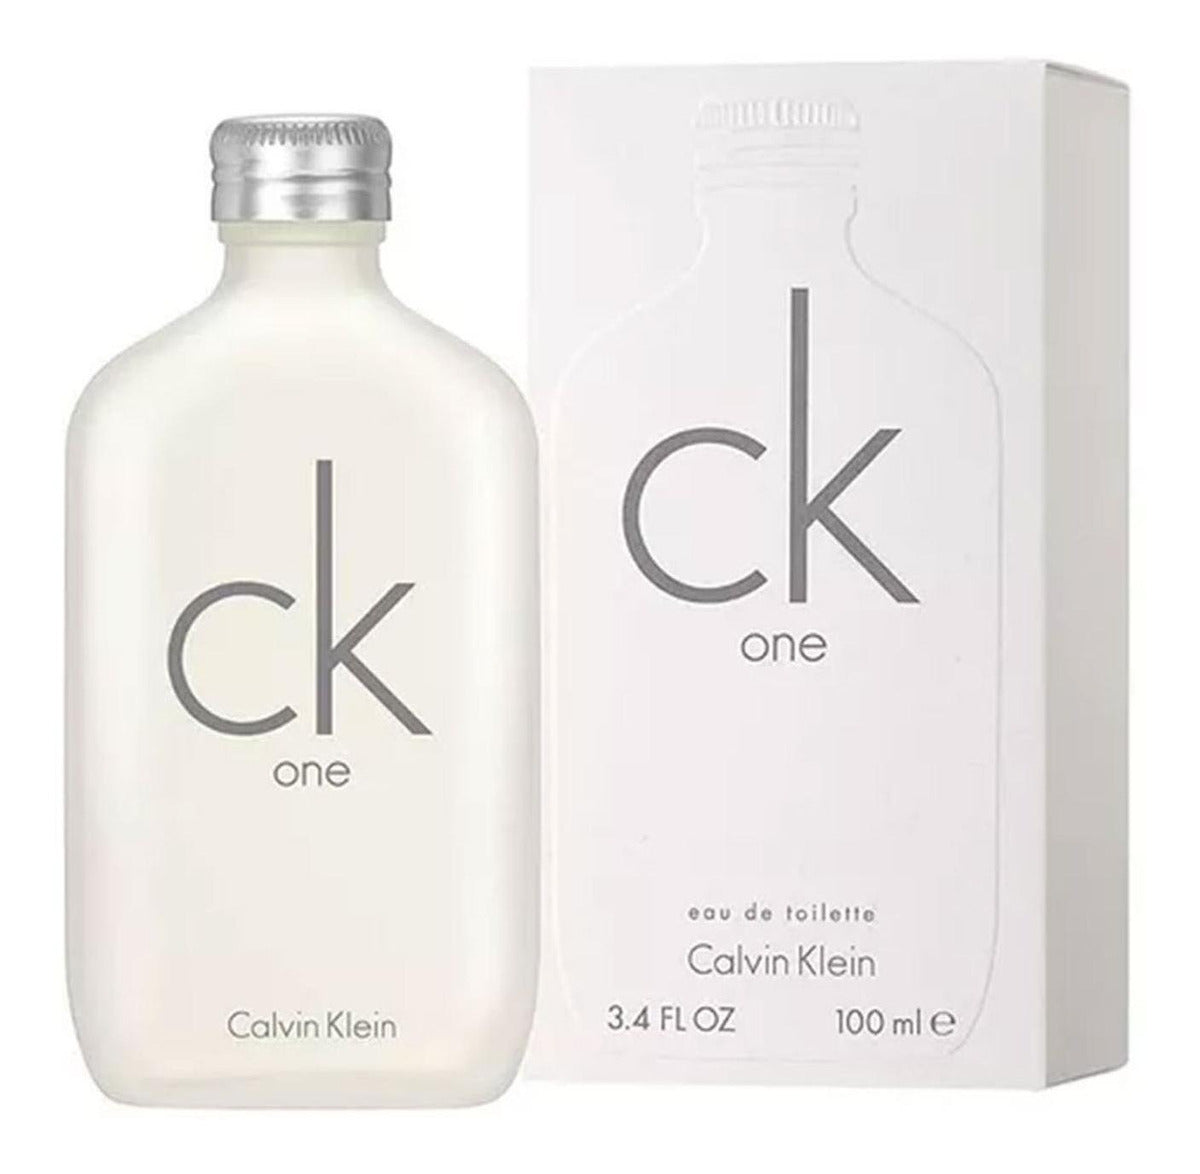 Calvin Klein Ck One 100ml Eau de Toilette Para Mujer